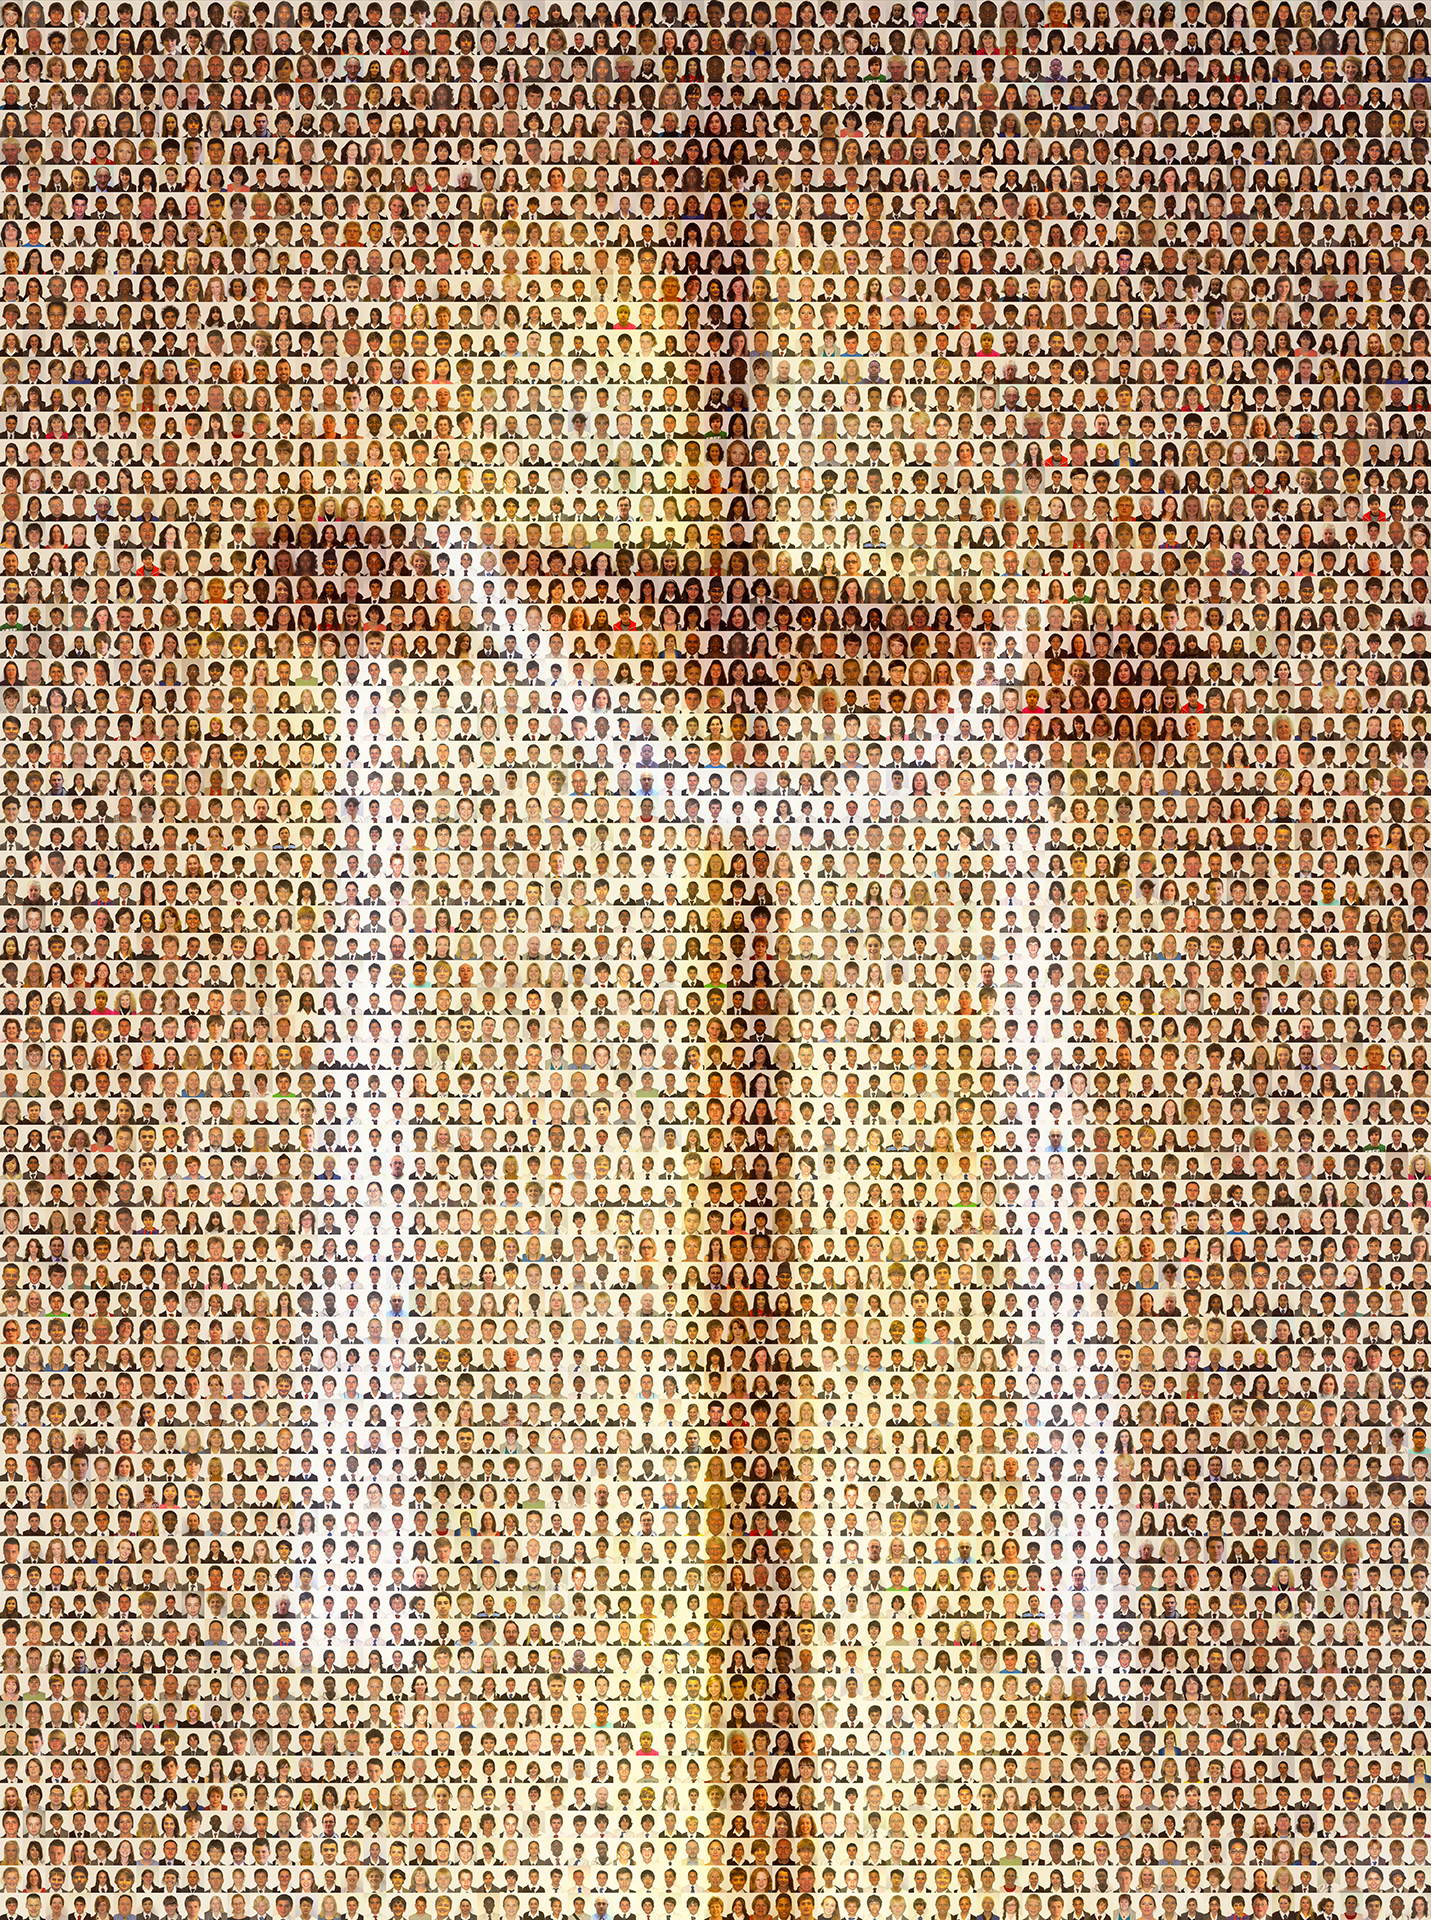 photo mosaic created using 849 school photos